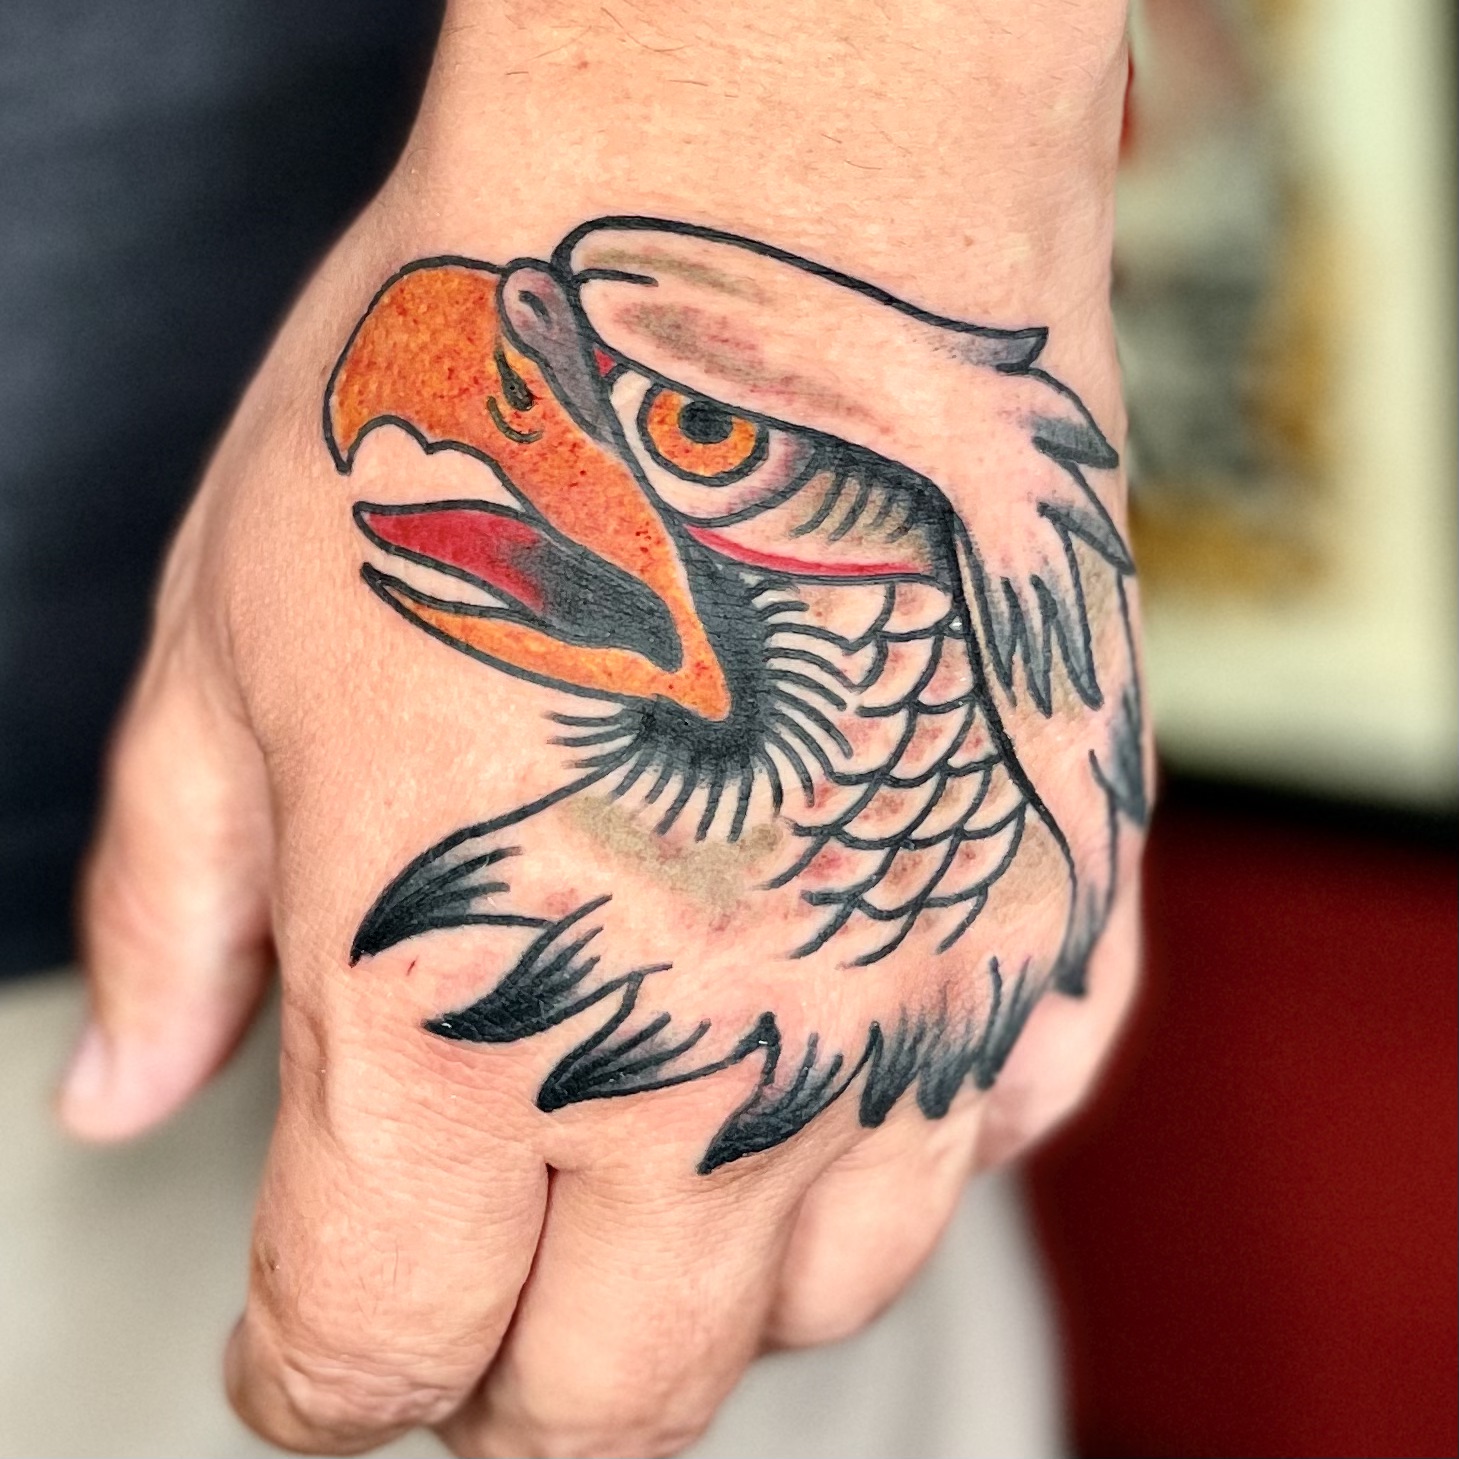 tattoo of an eagle from Dallas tattoo artist